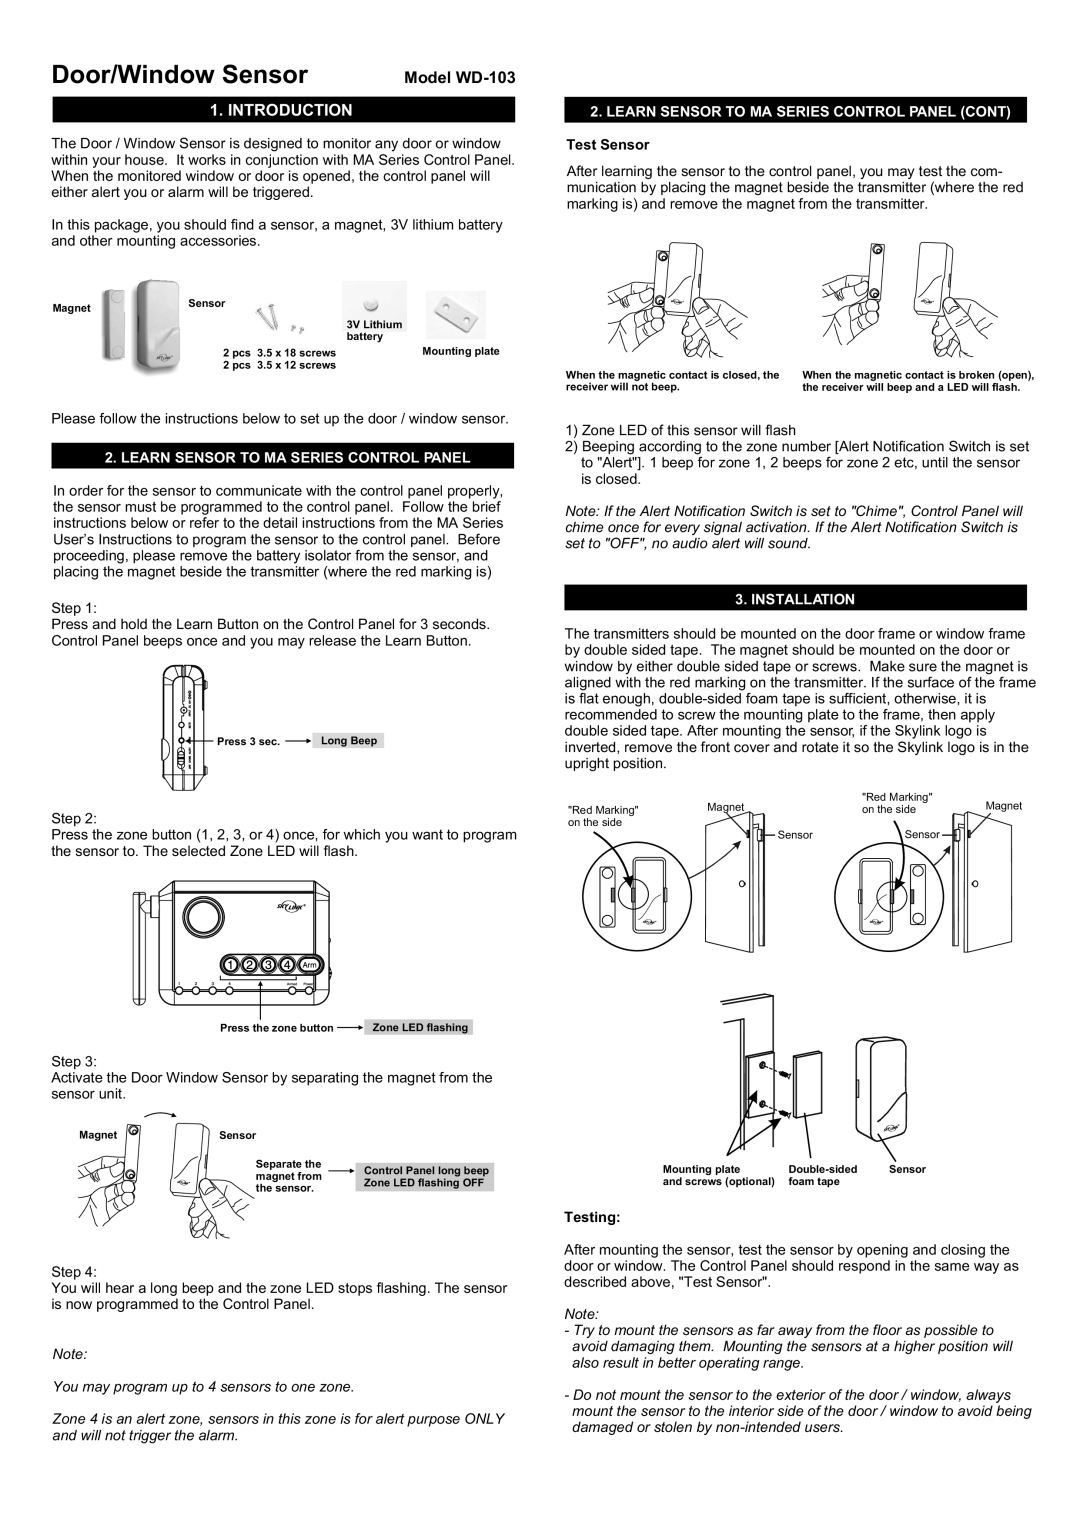 SkyLink manual Introduction, Test Sensor, Testing, Door/Window Sensor, Model WD-103, Installation 